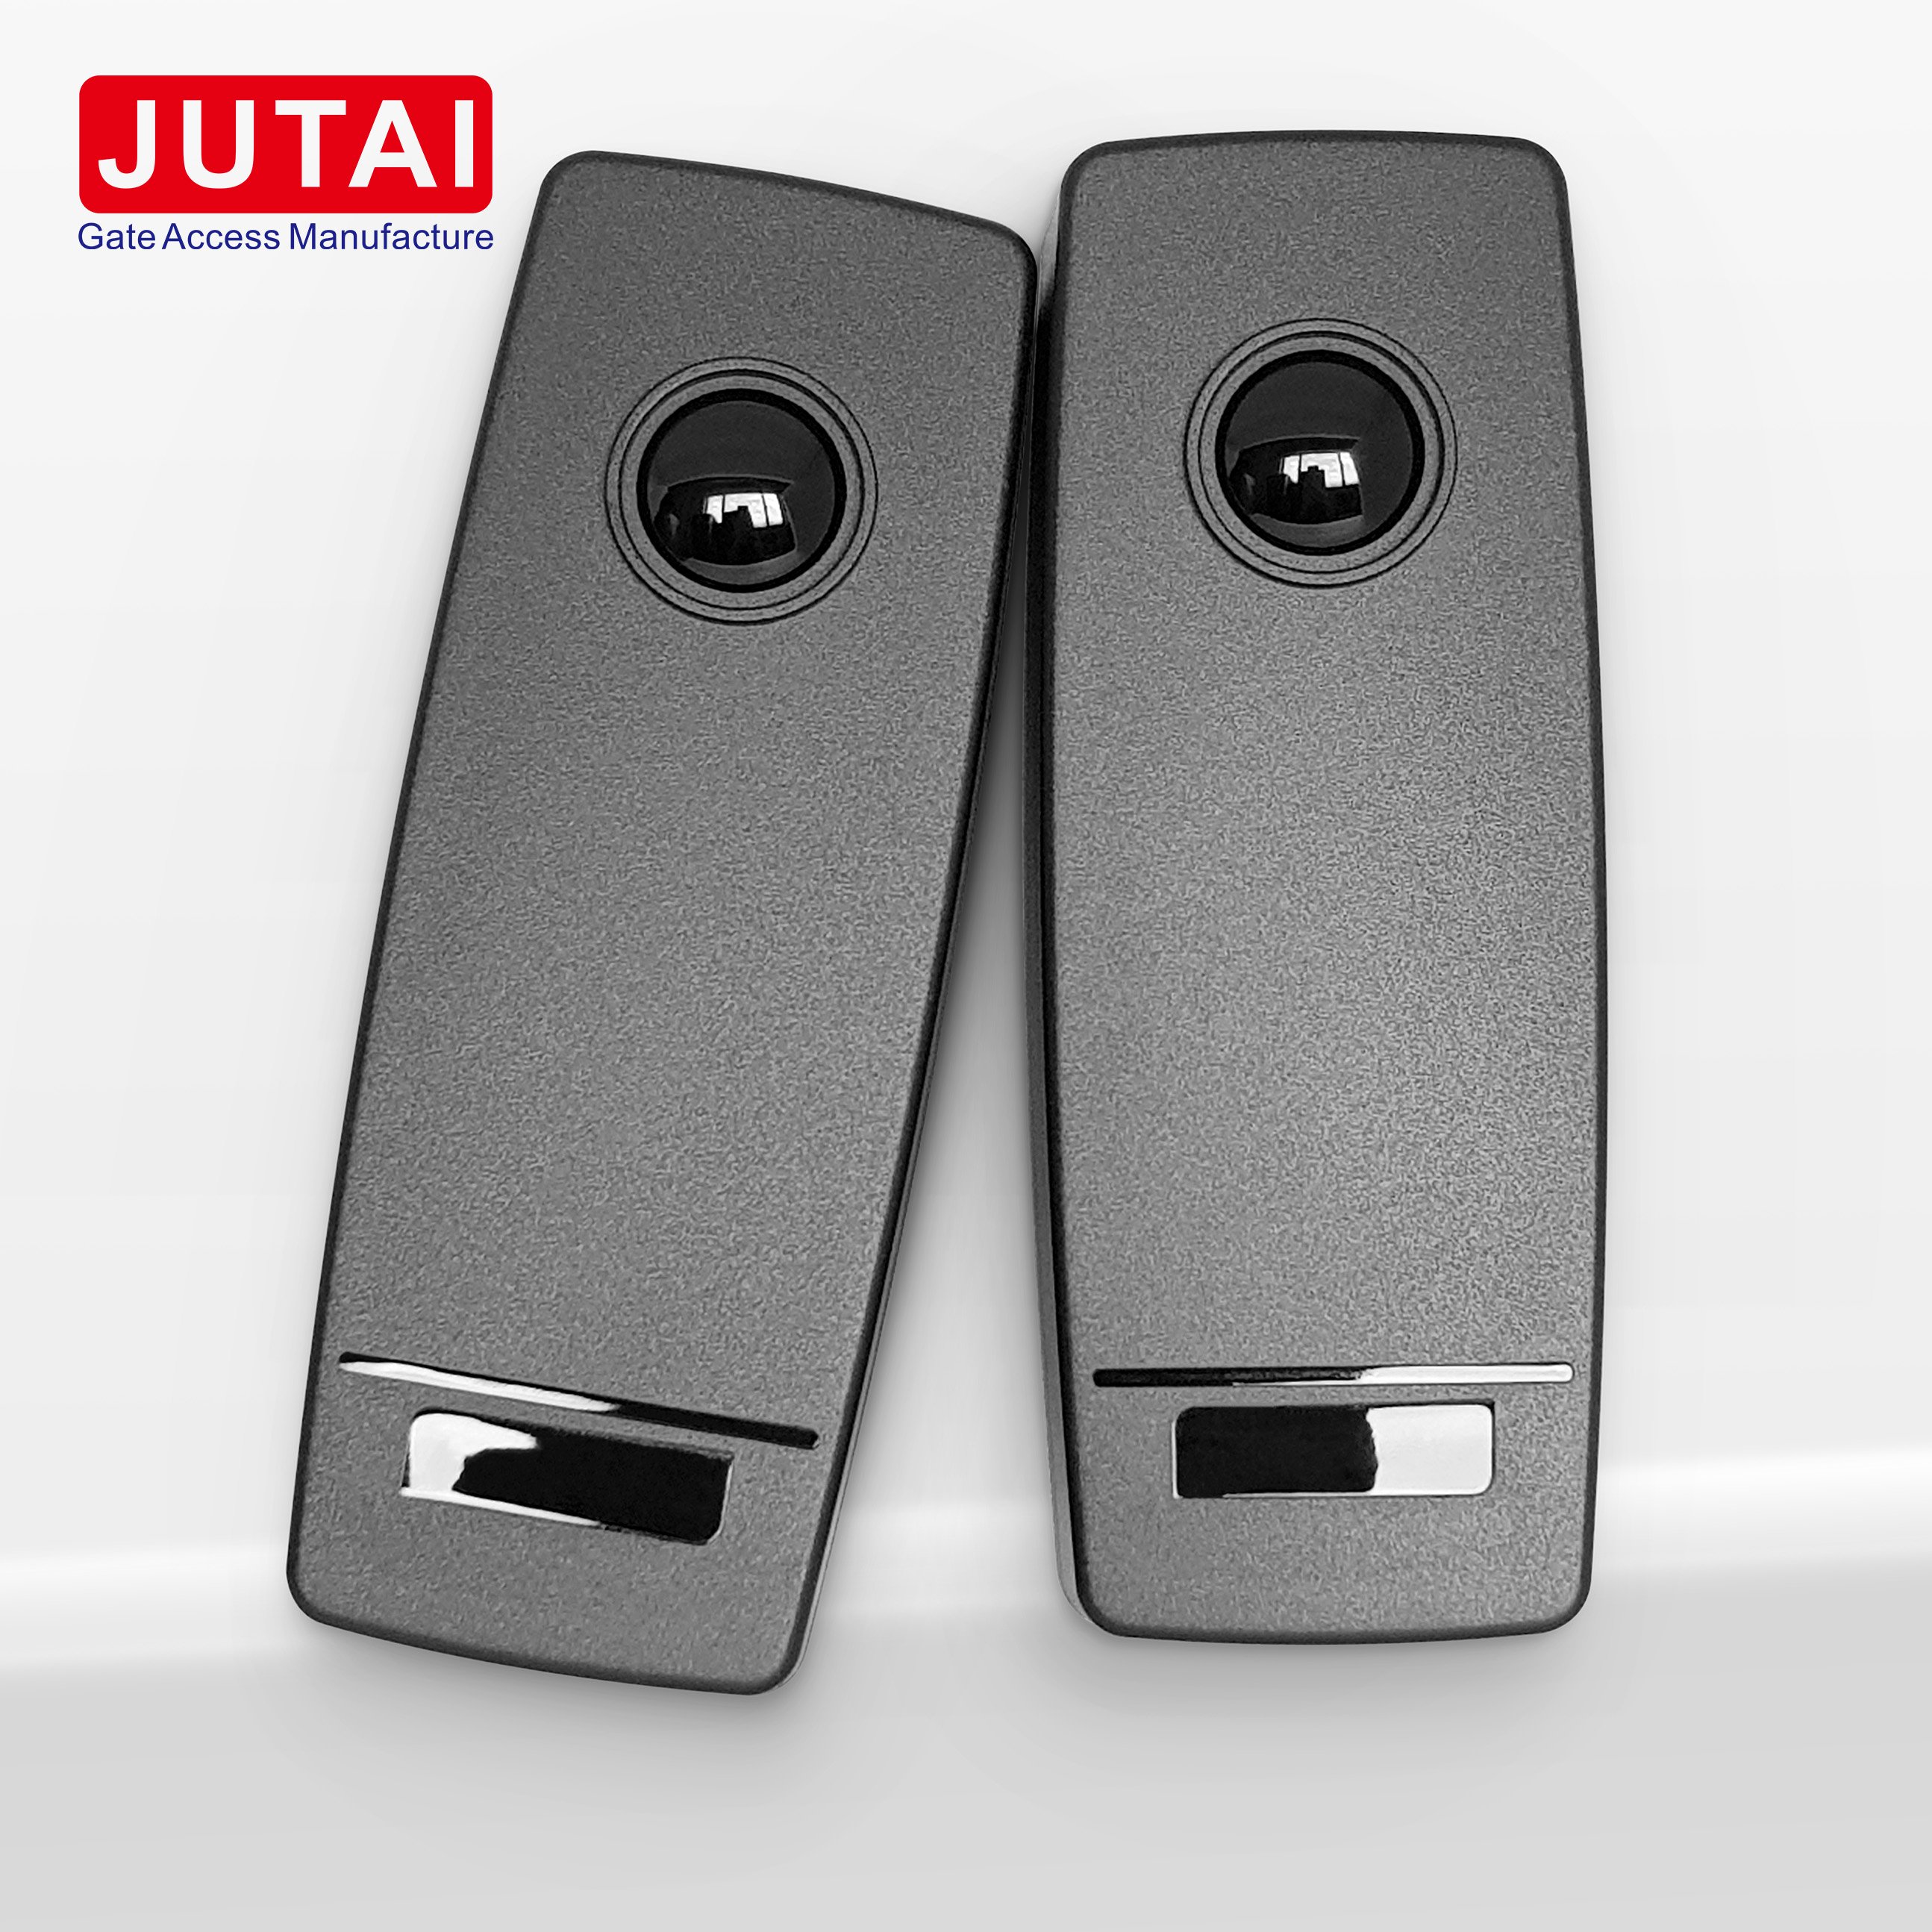 JUTAI WIS-30 Automatic gate  beam photocell sensor